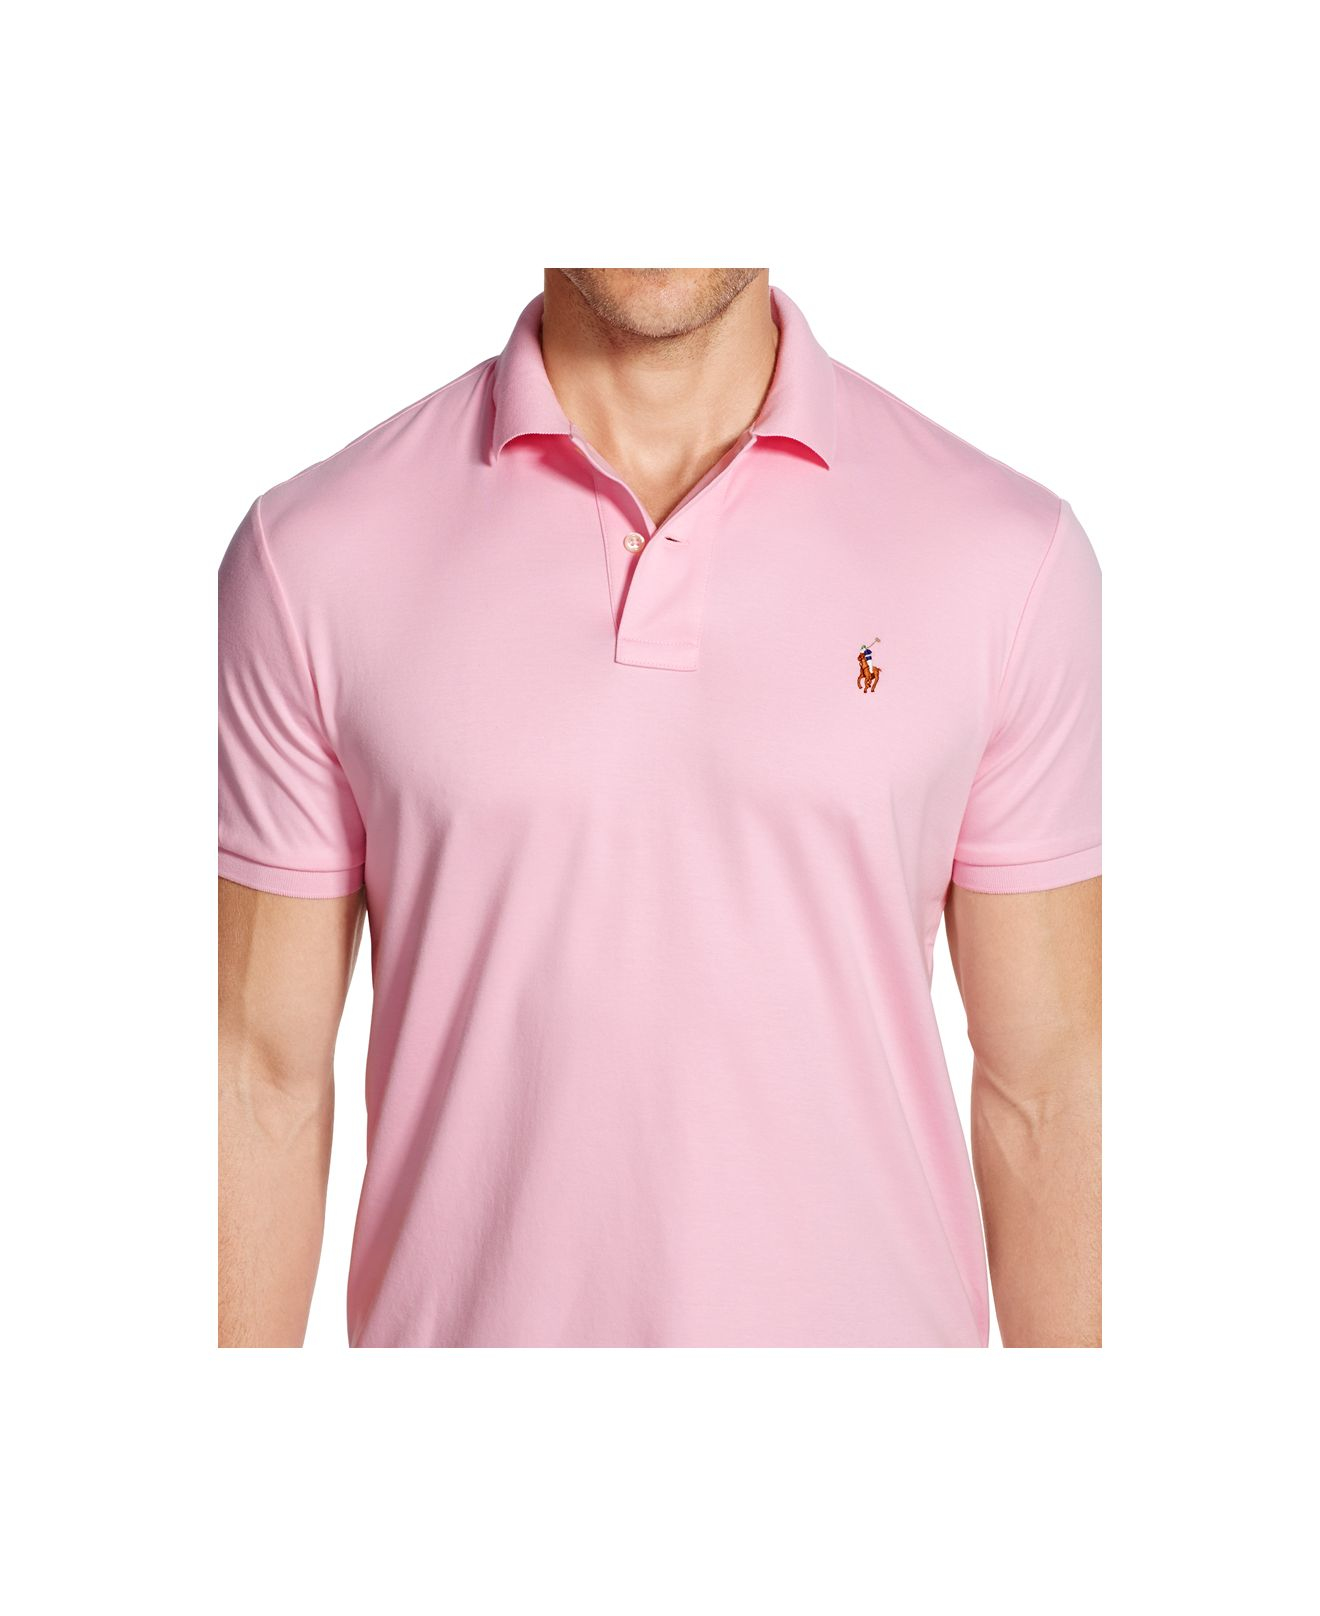 https://cdna.lystit.com/photos/eaf6-2015/12/24/polo-ralph-lauren-pink-pima-cotton-polo-shirt-product-0-546408794-normal.jpeg